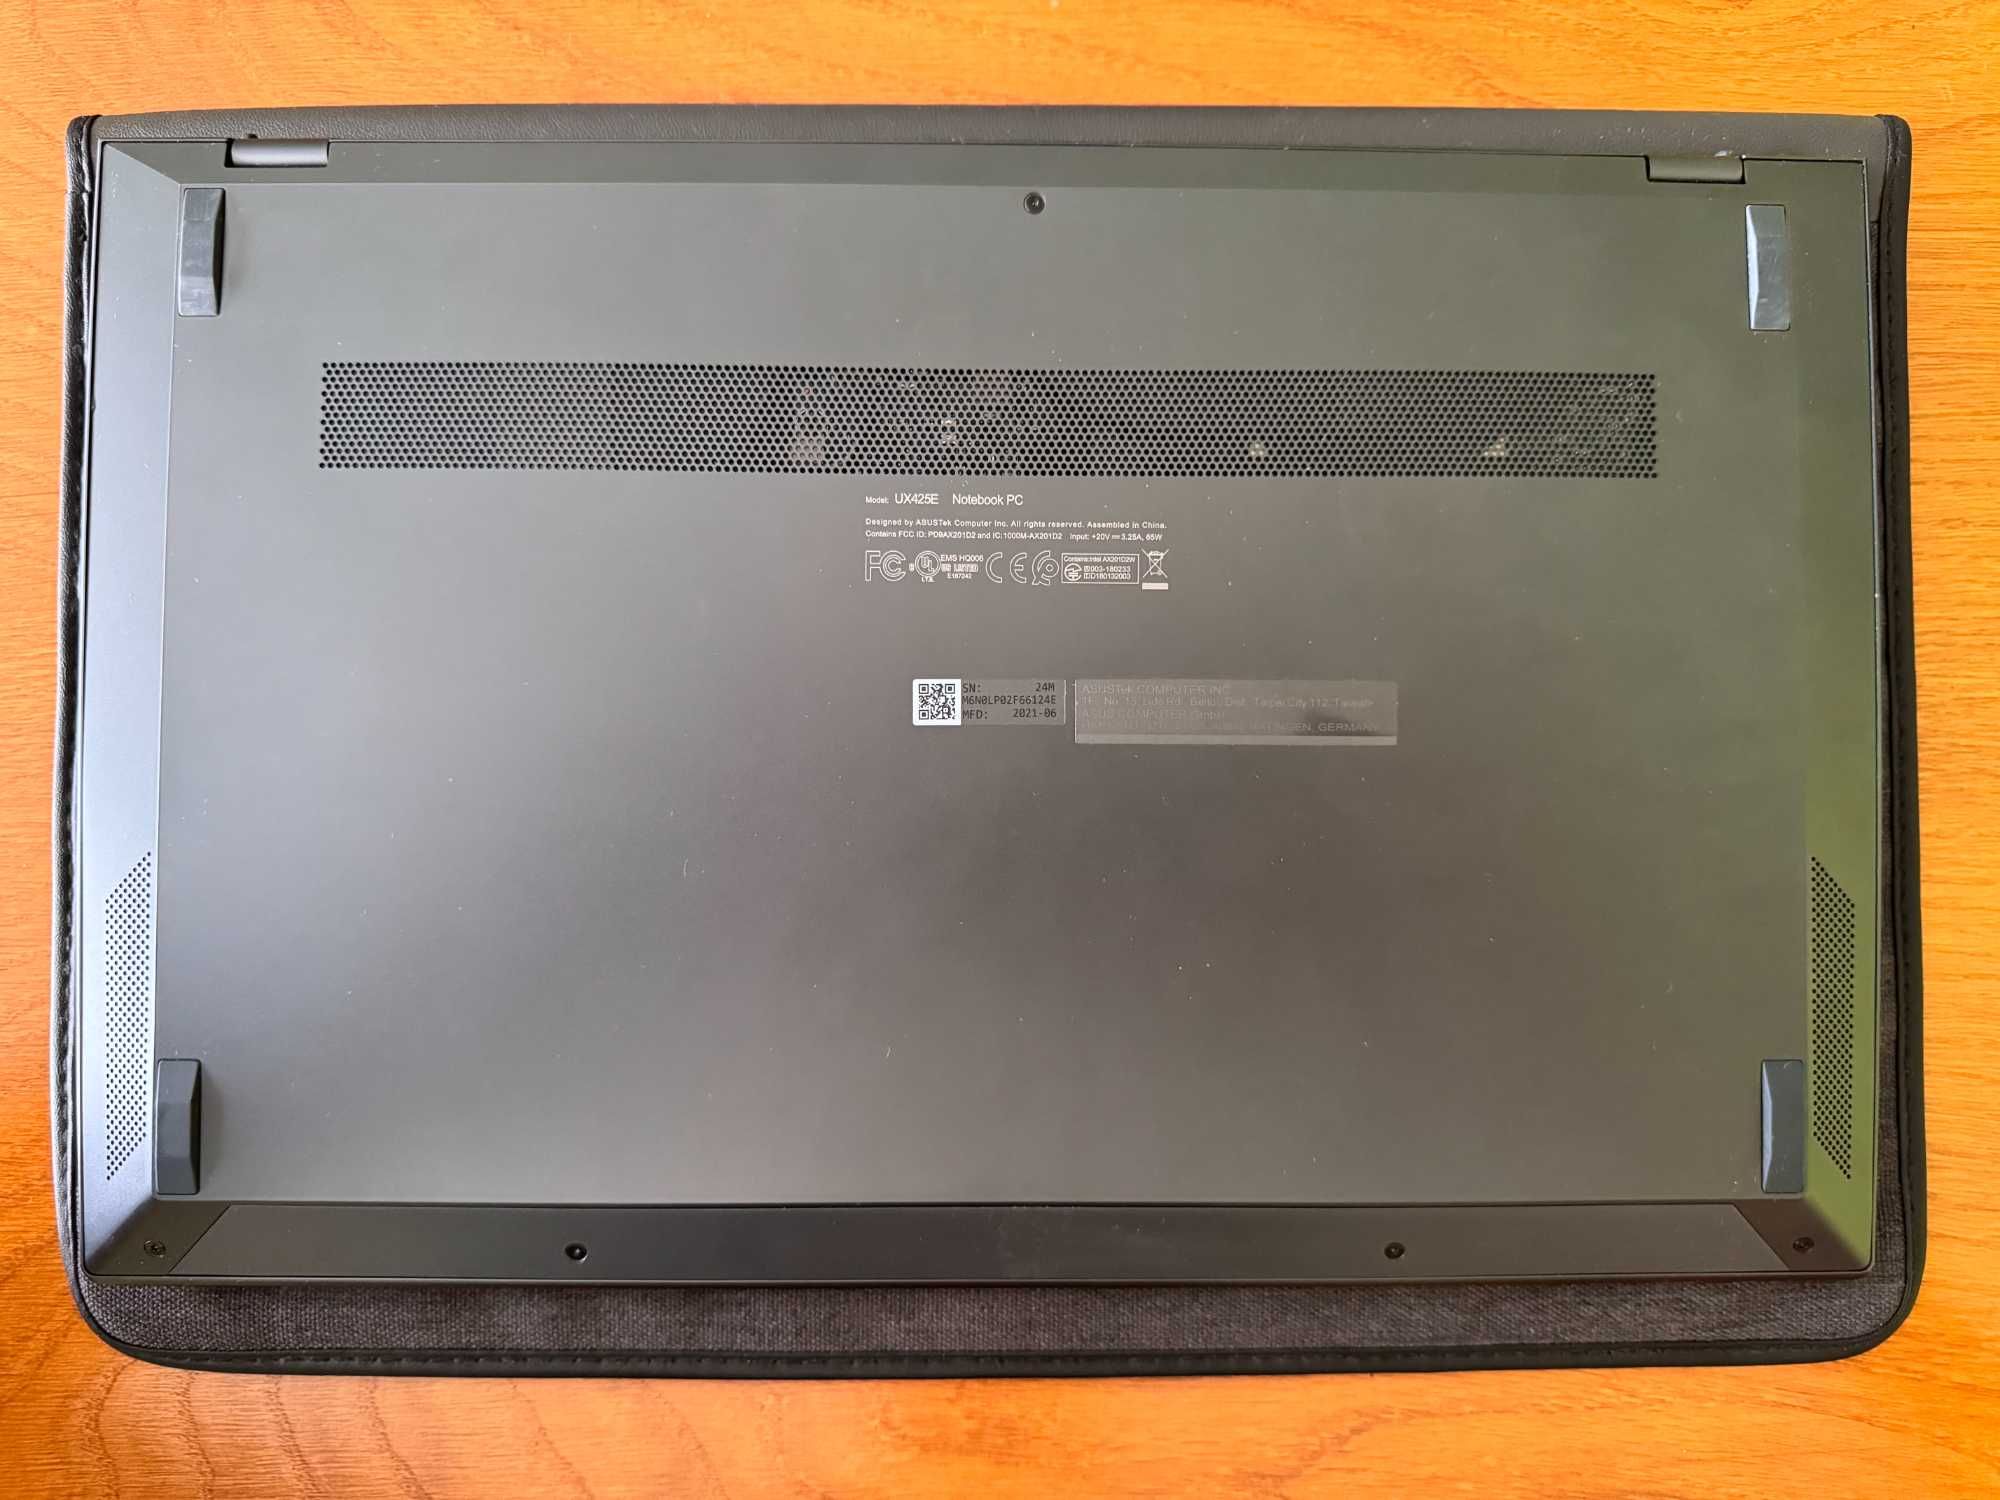 Laptop ASUS Zenbook UX425e 1TB